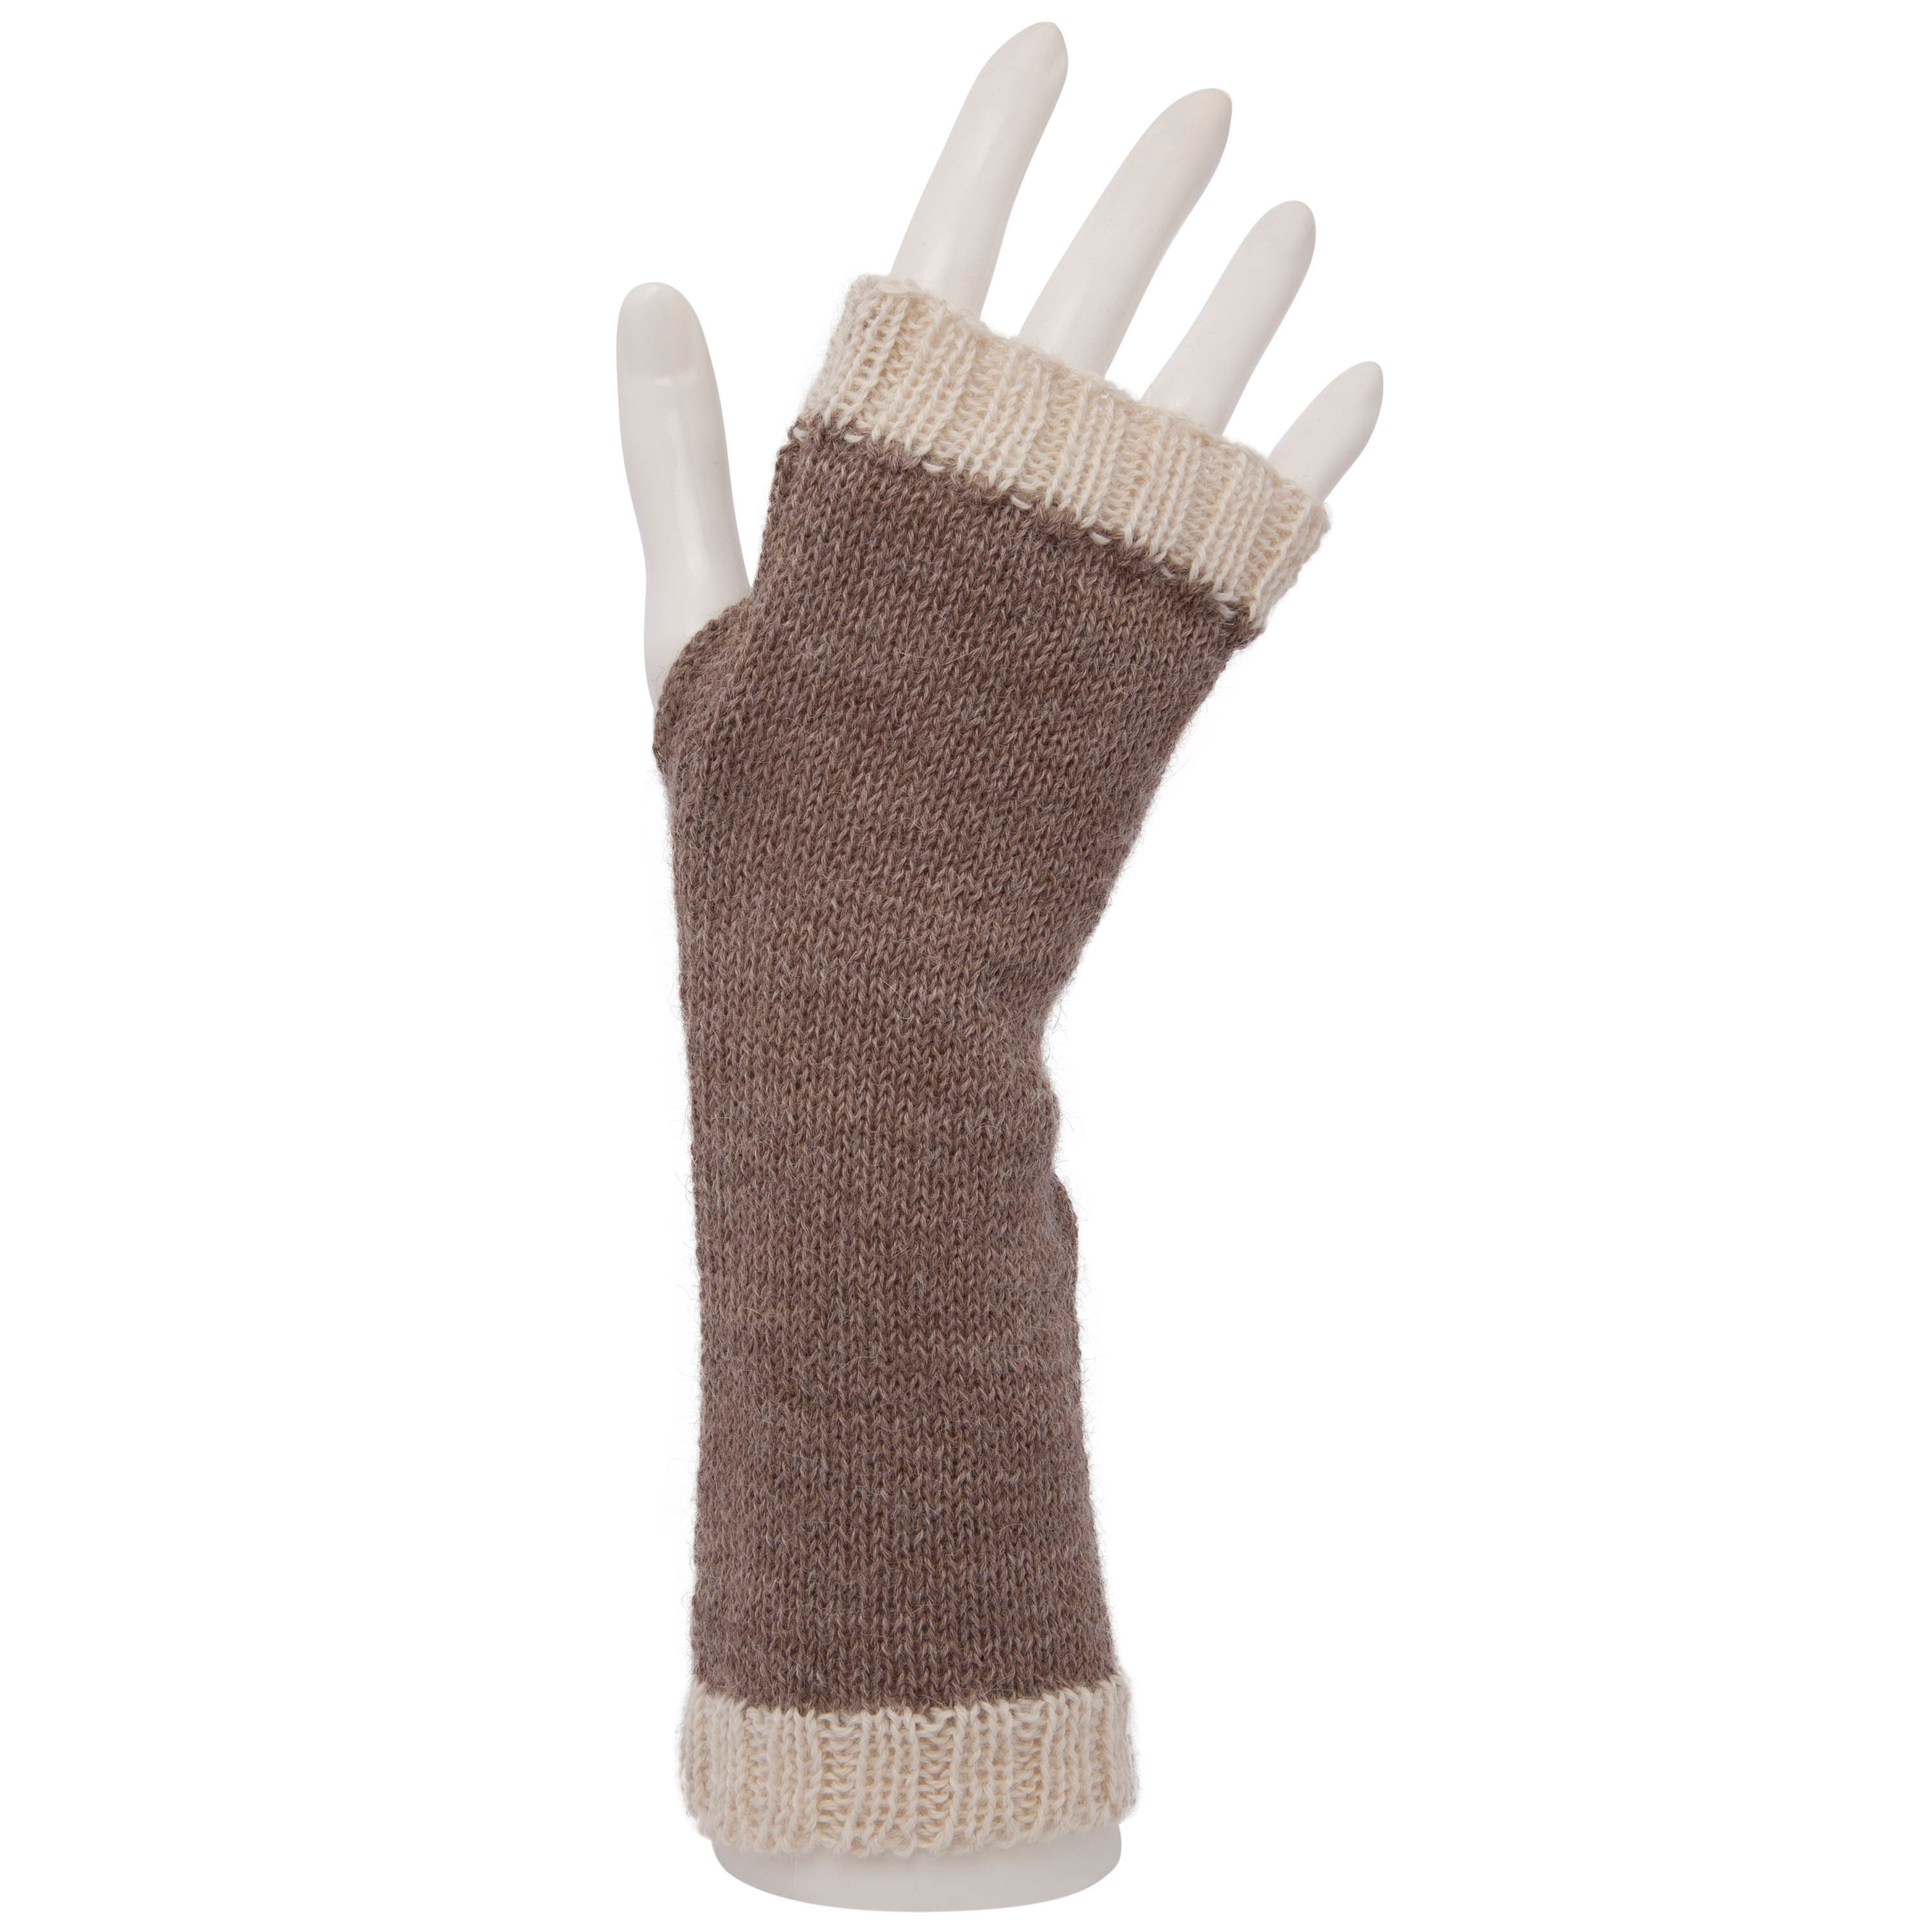 Fair trade Womens Woollen Wristwarmers Accessories Gloves & Mittens Arm Warmers Wool Gloves eco friendly natural fibre ethical gift 100% Alpaca Fingerless Mittens hand warmers 